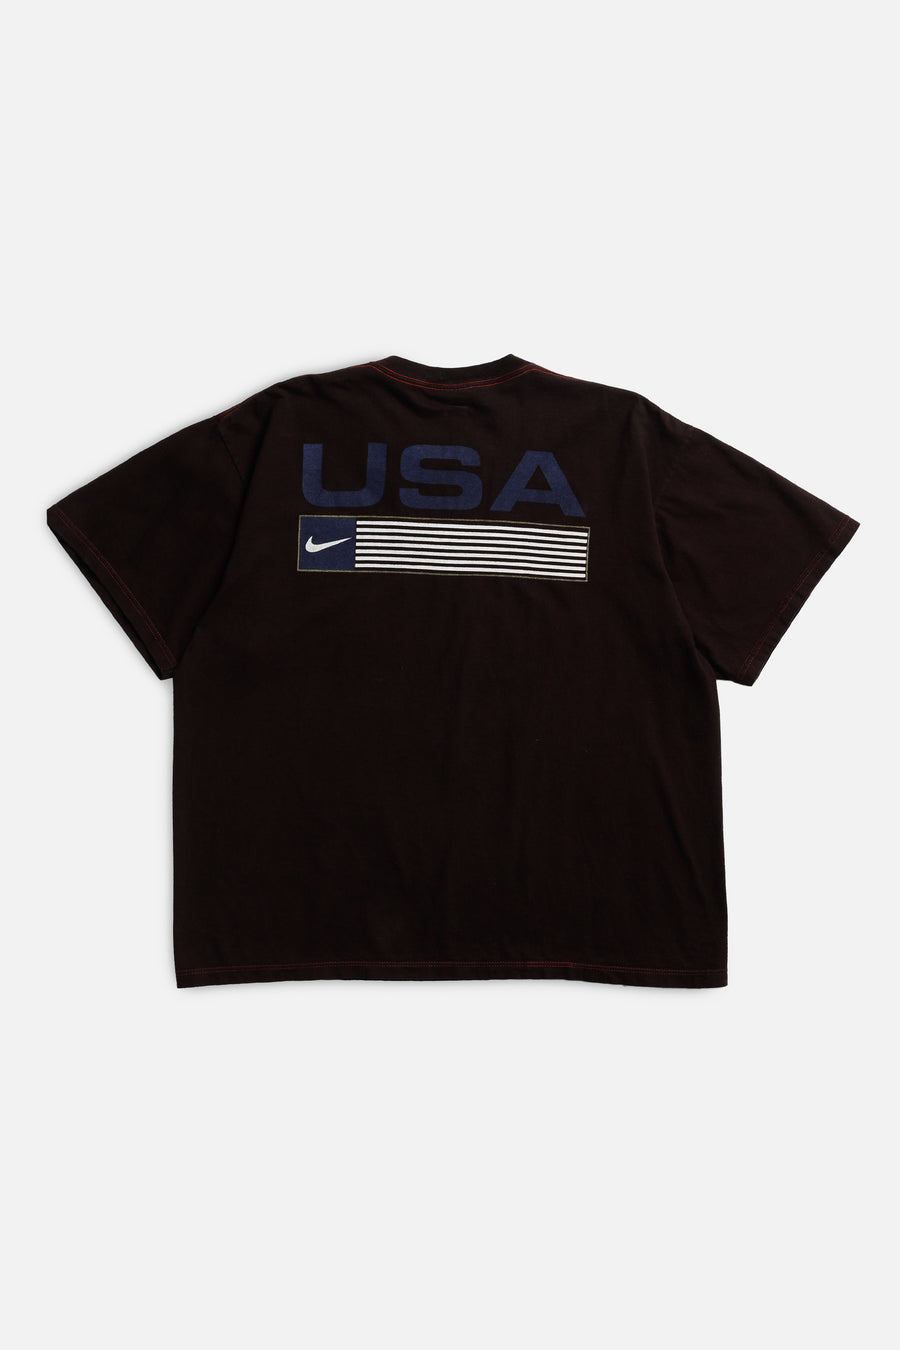 Vintage Nike USA Tee - XL